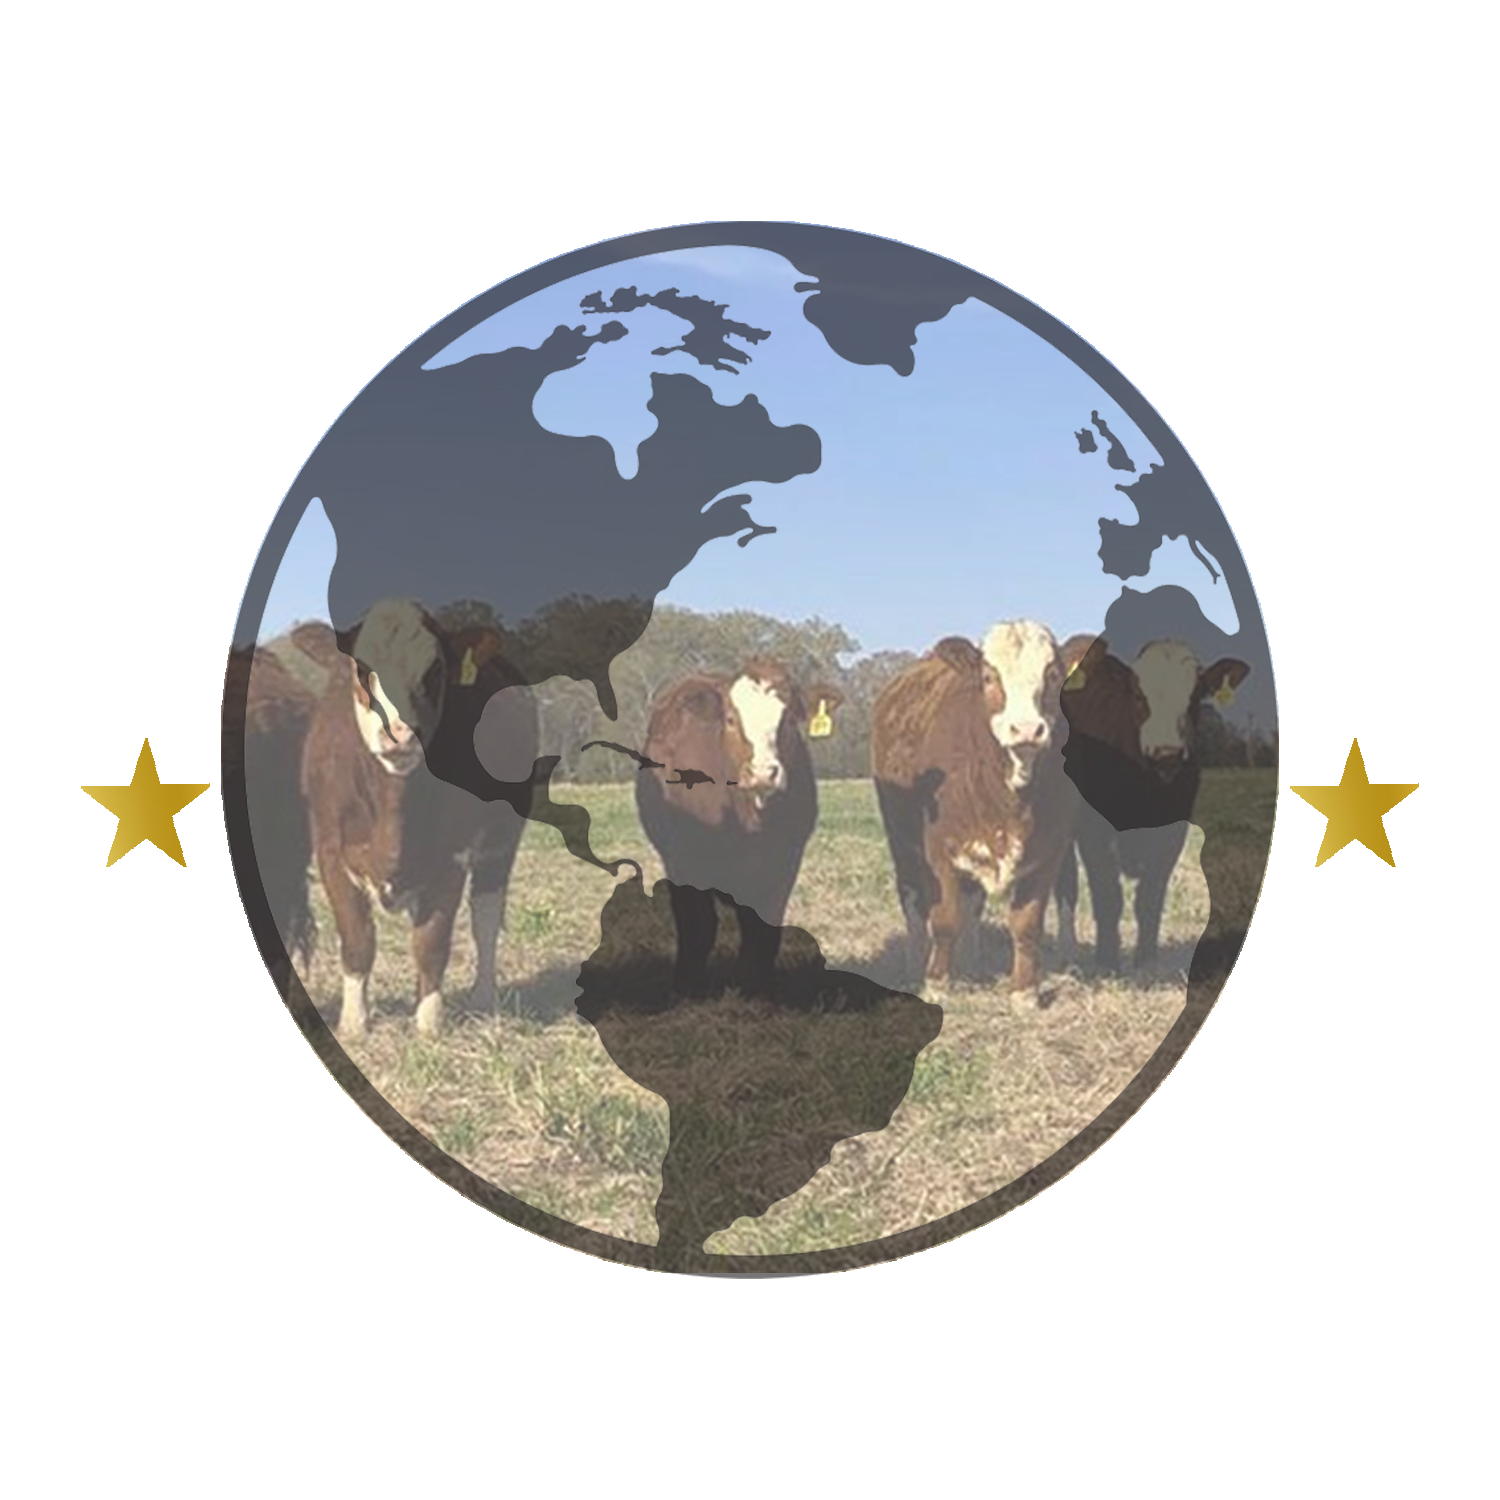 The Fullblood Simmental Fleckvieh Federation